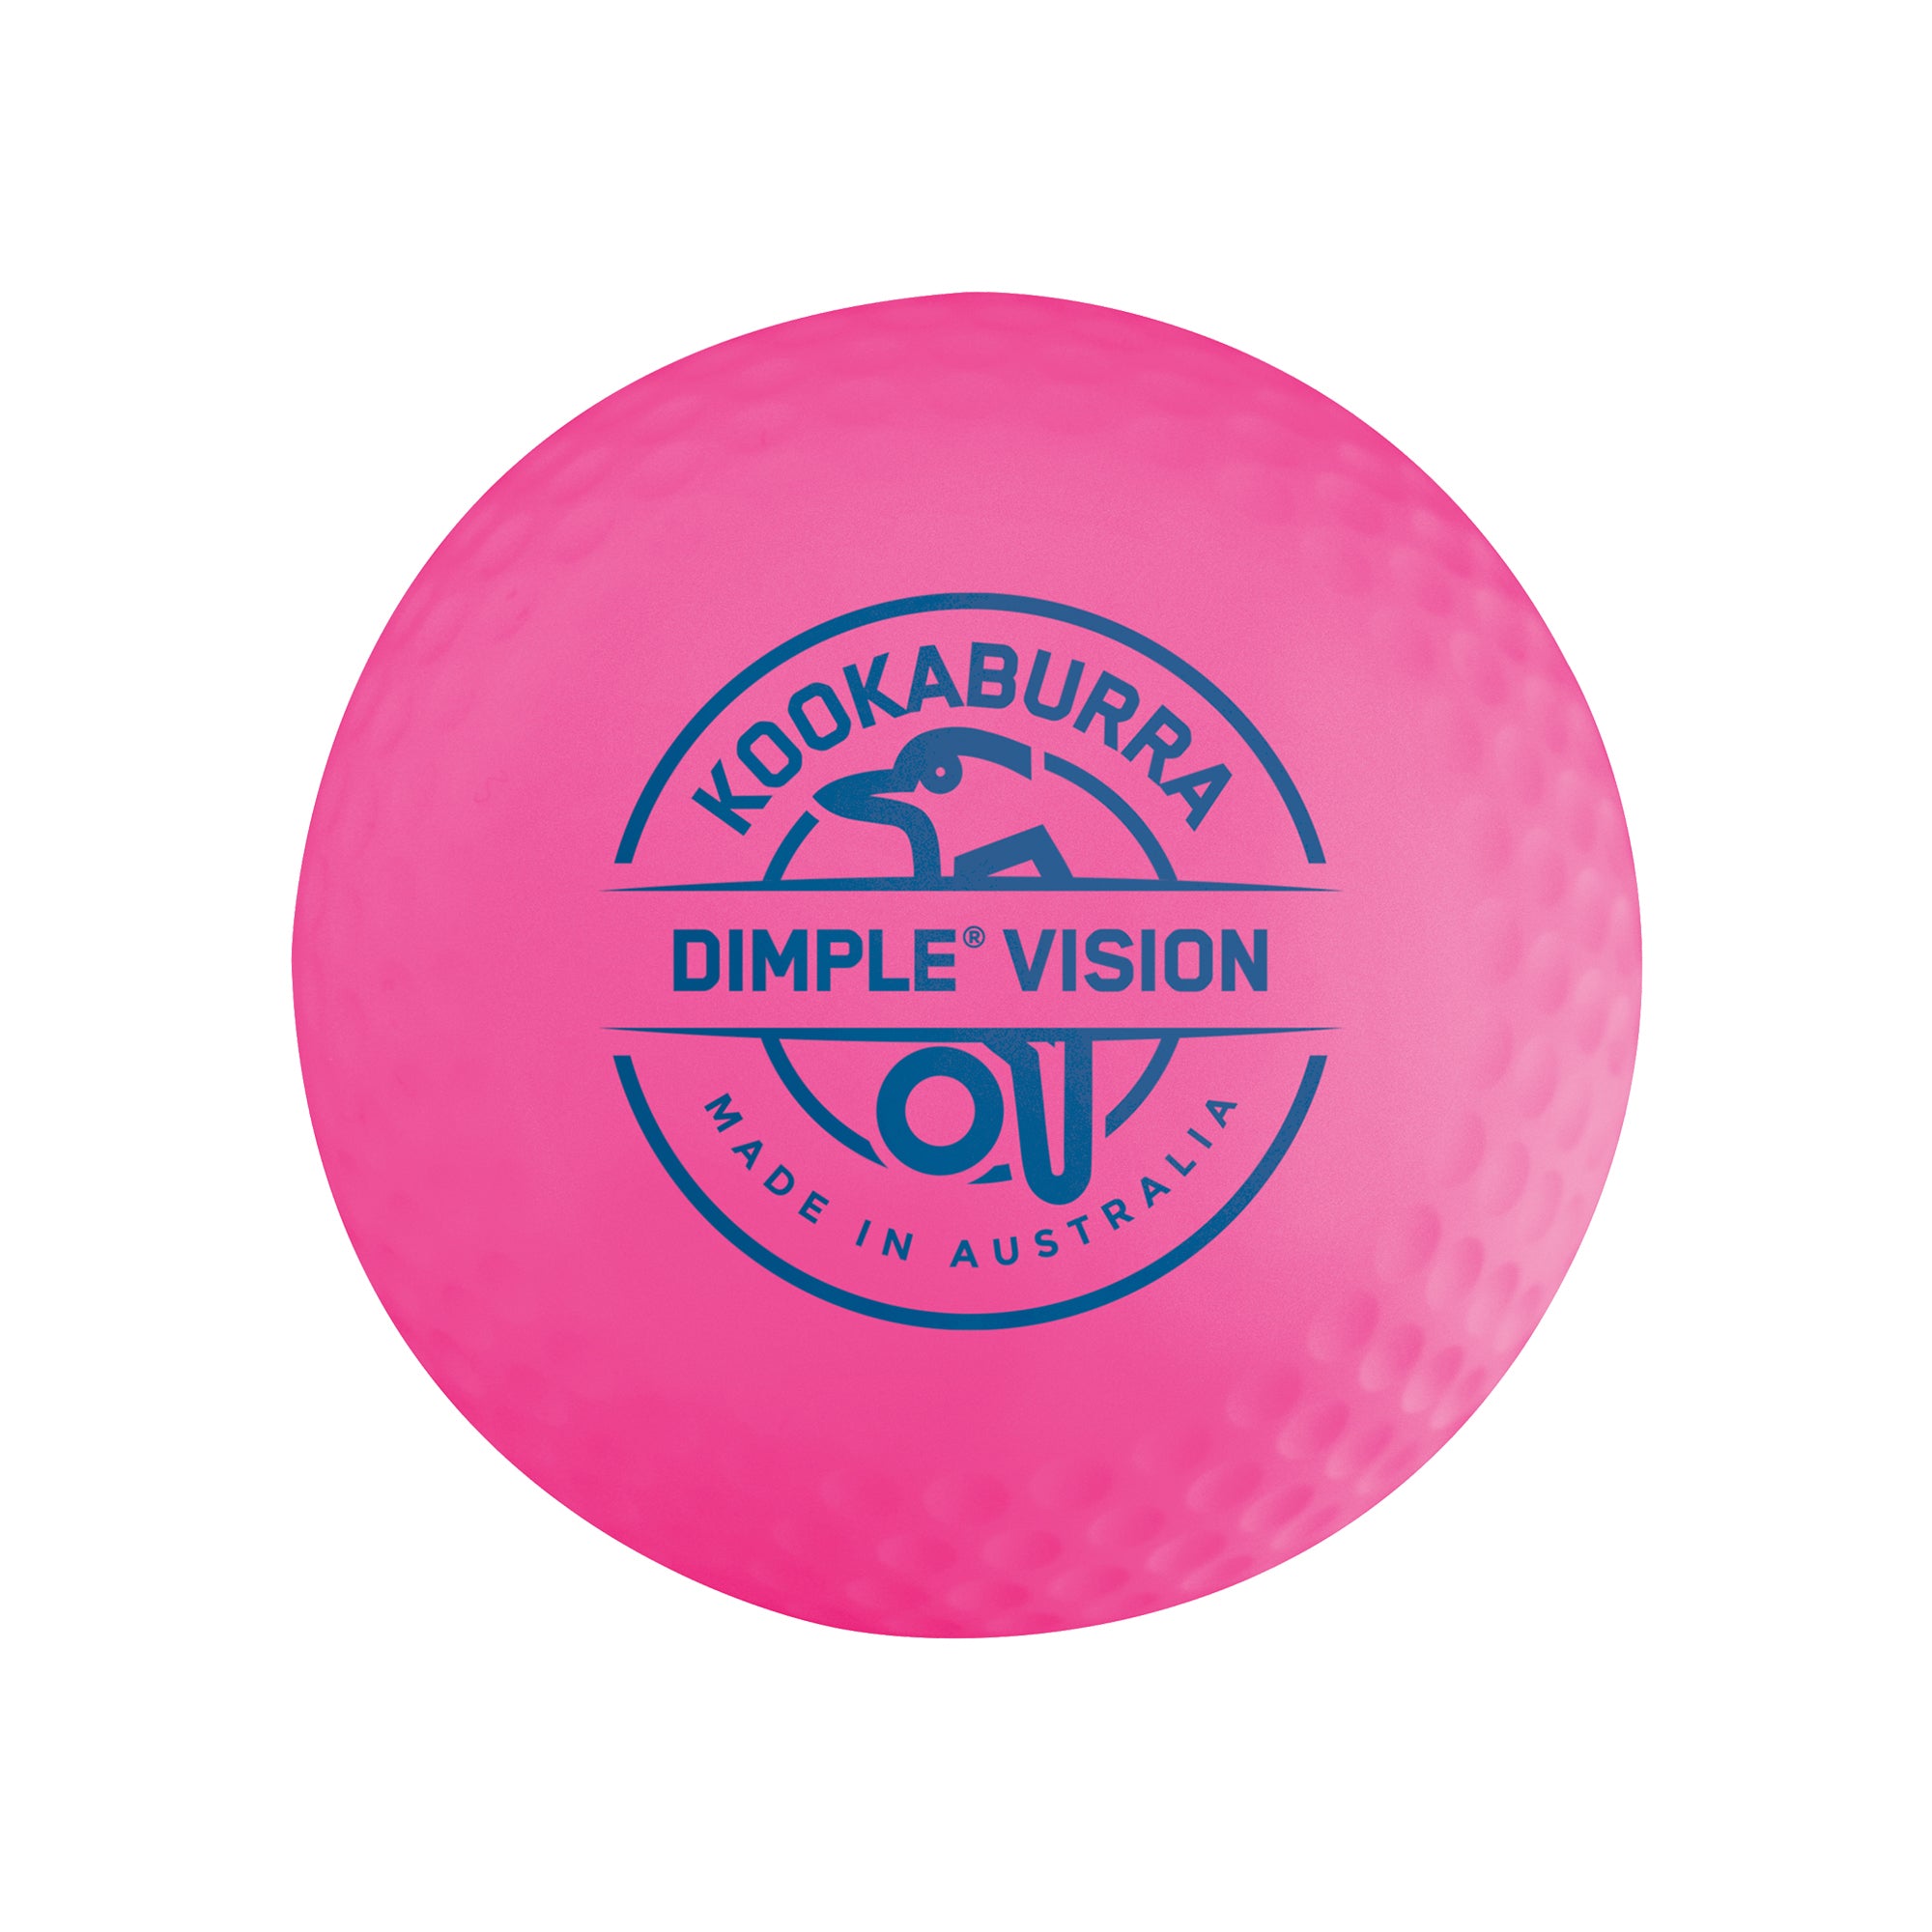 Kookaburra Dimple Vision Hockey Ball - Pink